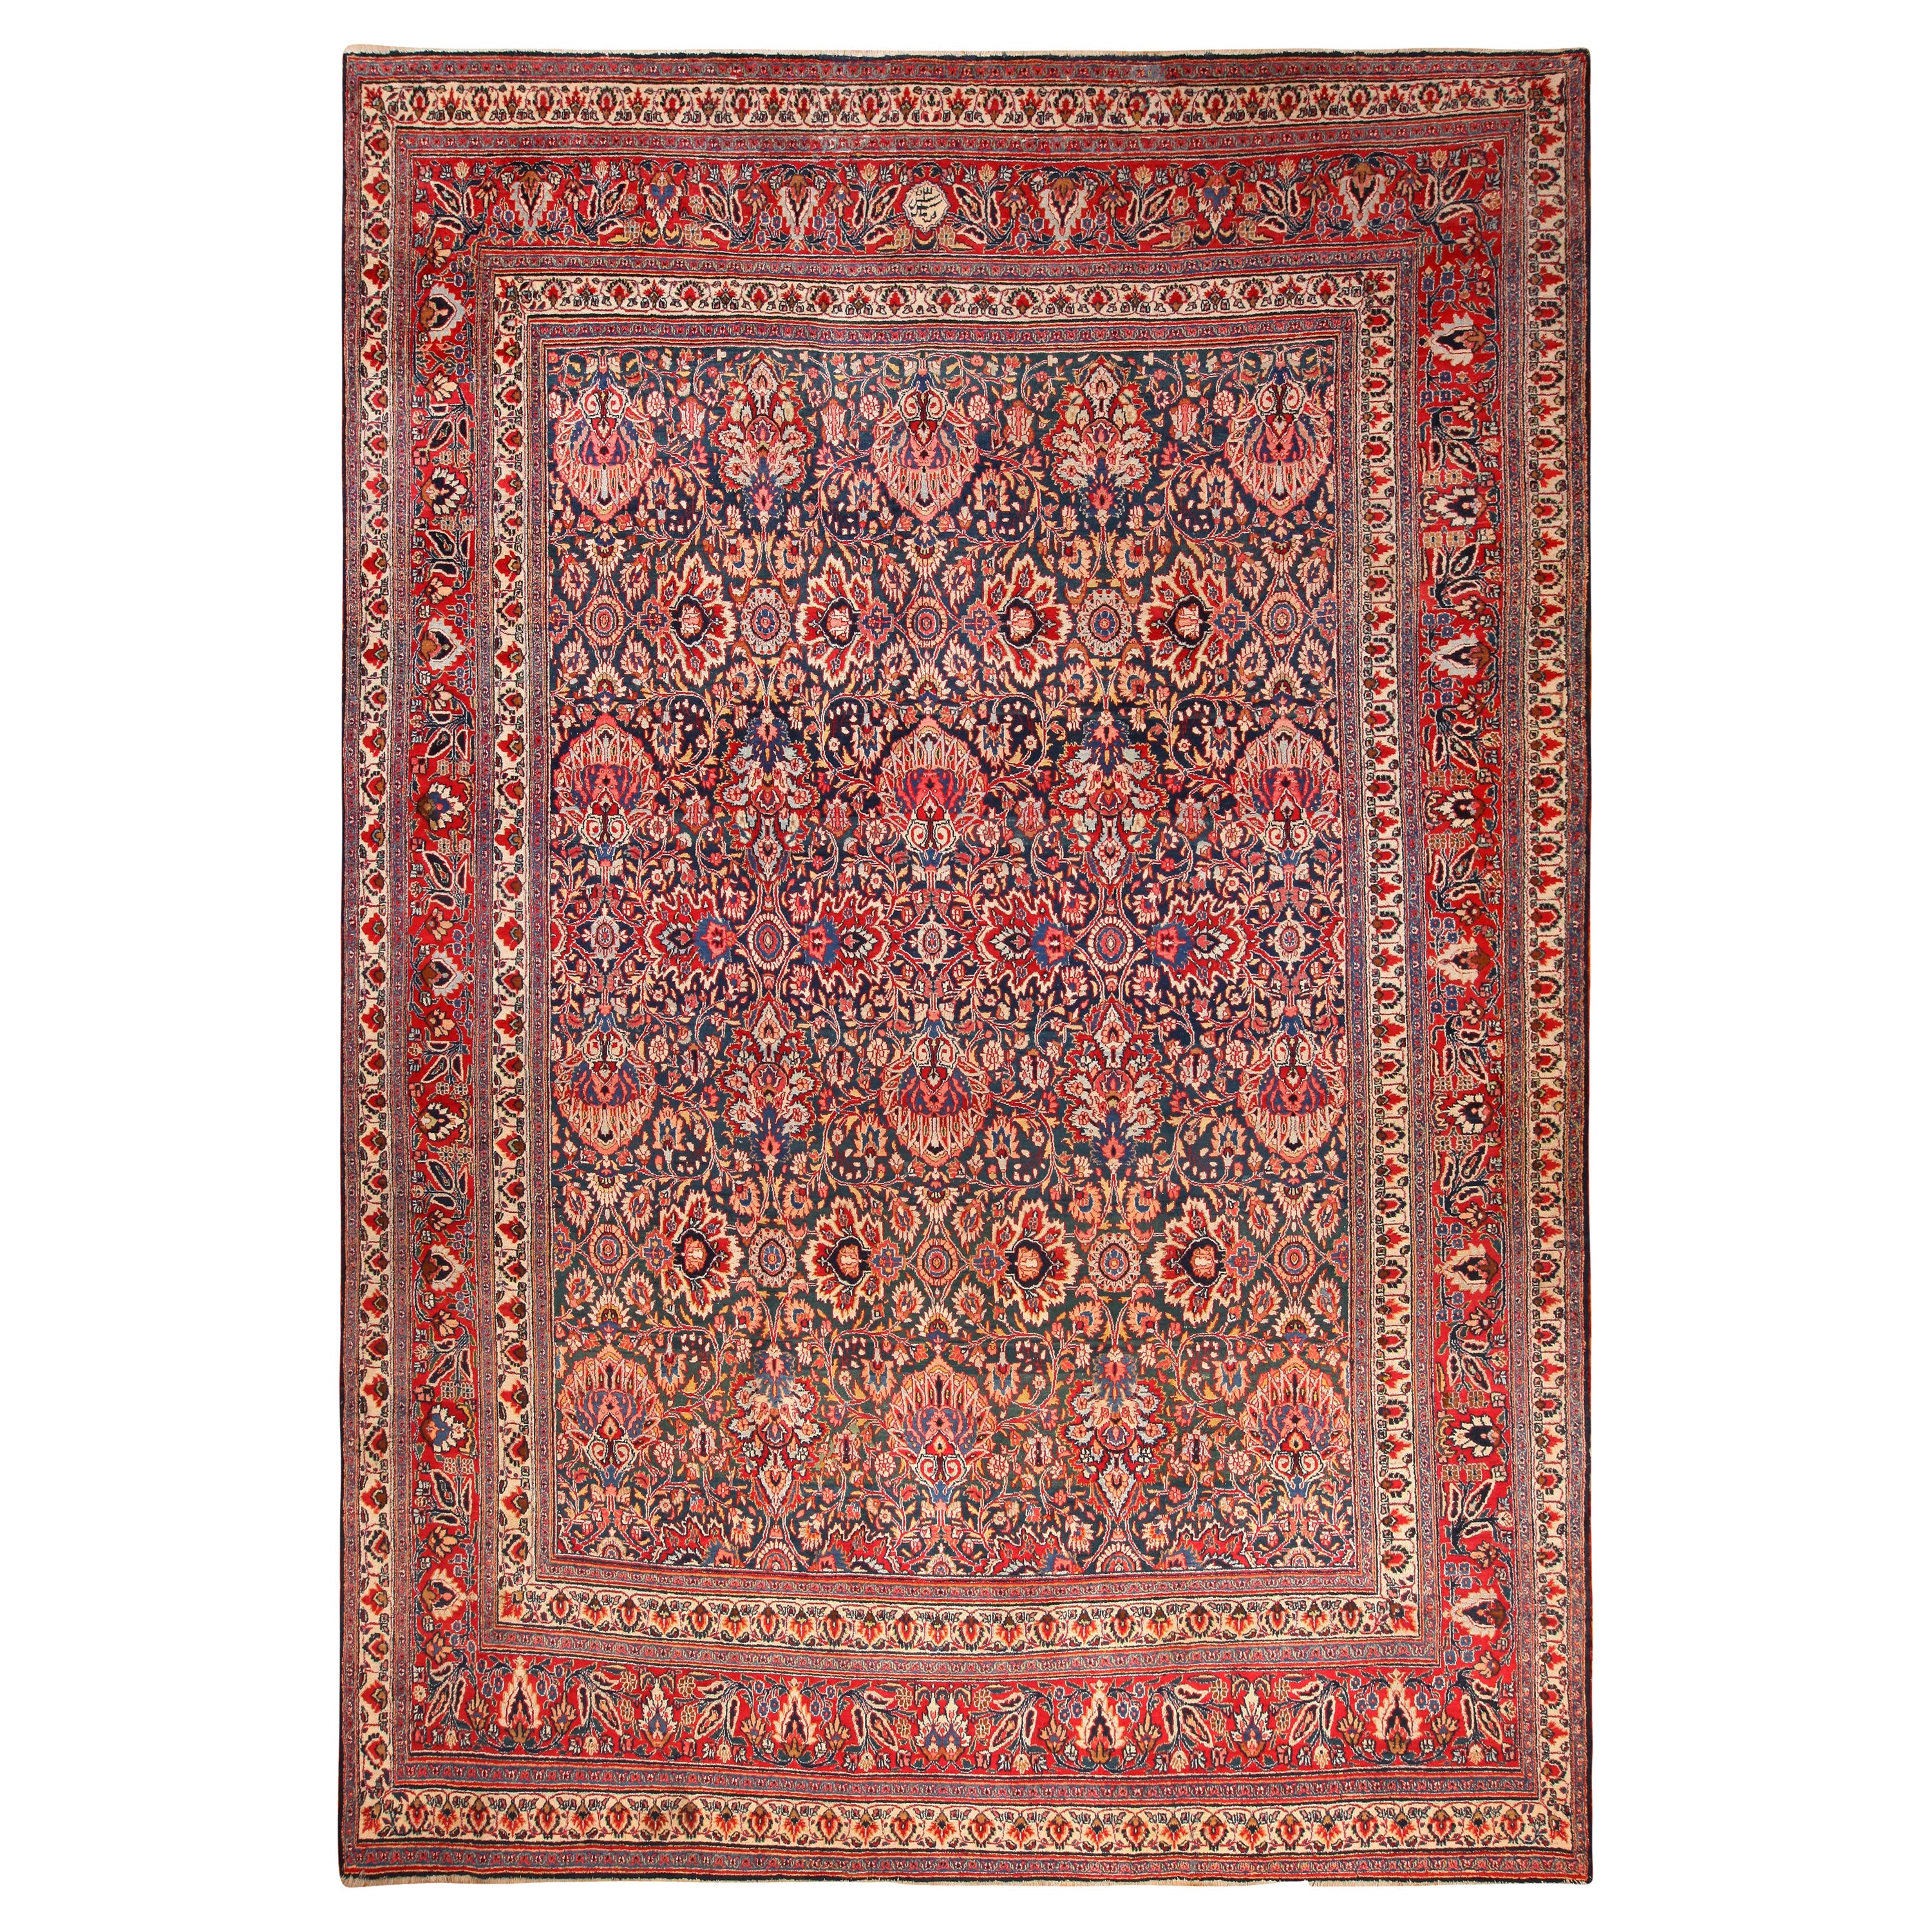 Large Size Fine Weave Antique Floral Persian Khorassan Rug 11'10" x 17'